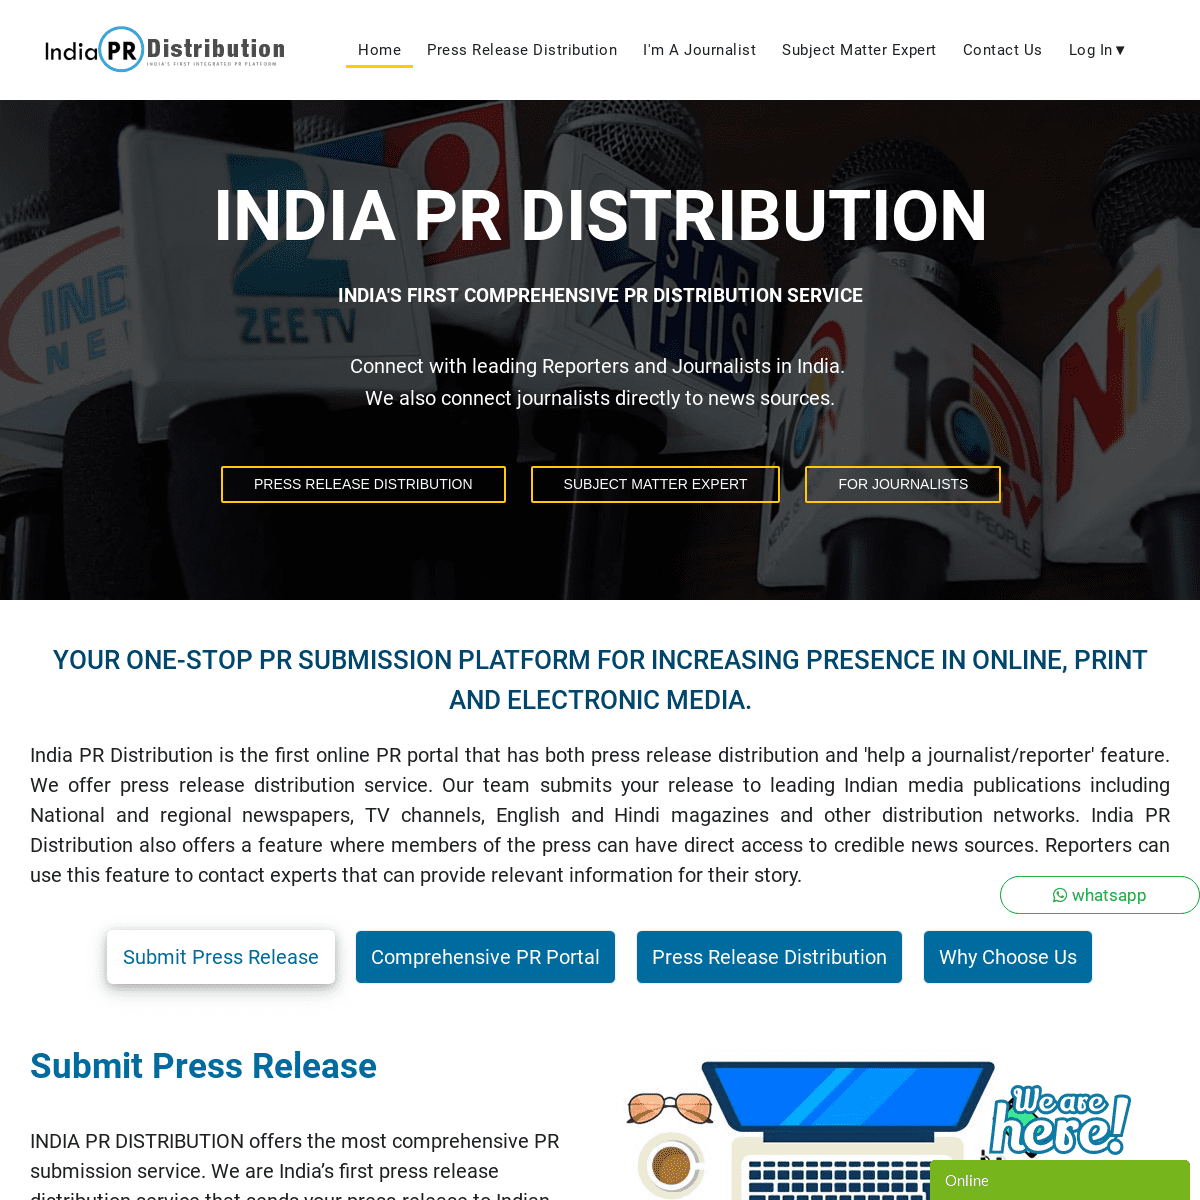 A complete backup of indiaprdistribution.com